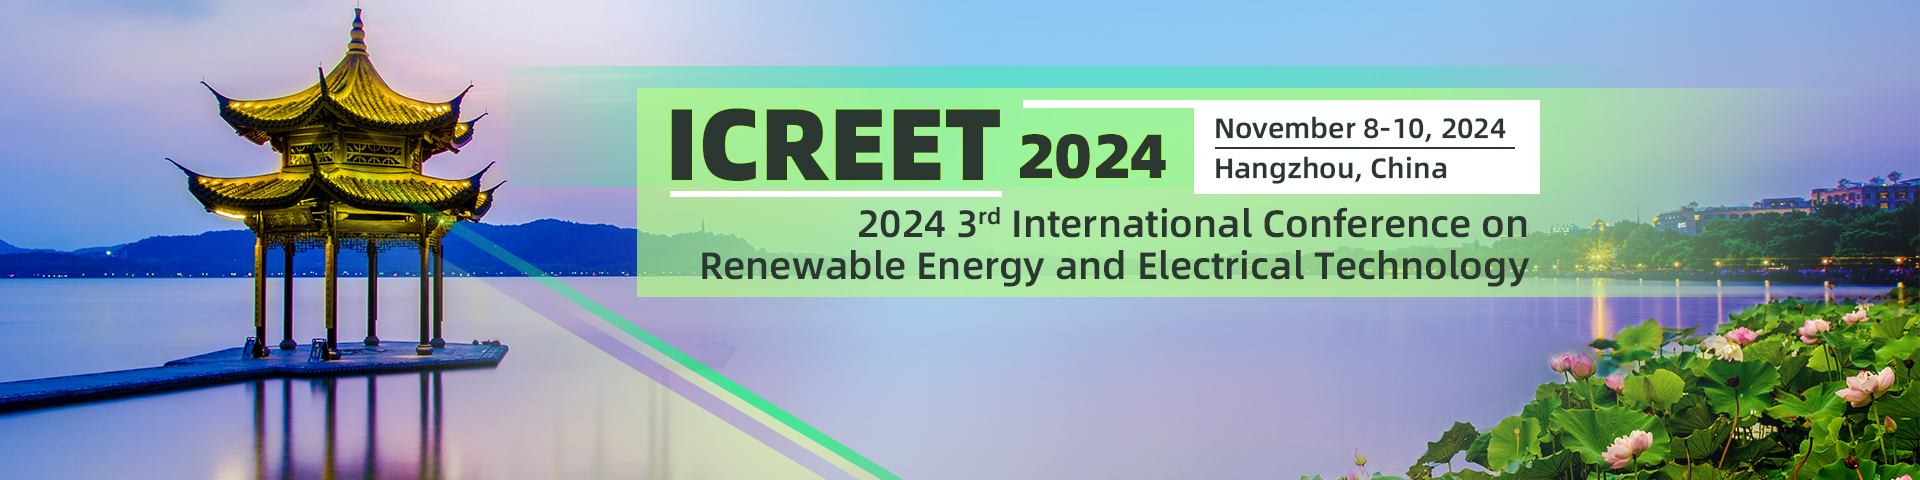 2024 3rd International Conference on Renewable Energy and Electrical Technology (ICREET 2024), Hangzhou, Zhejiang, China